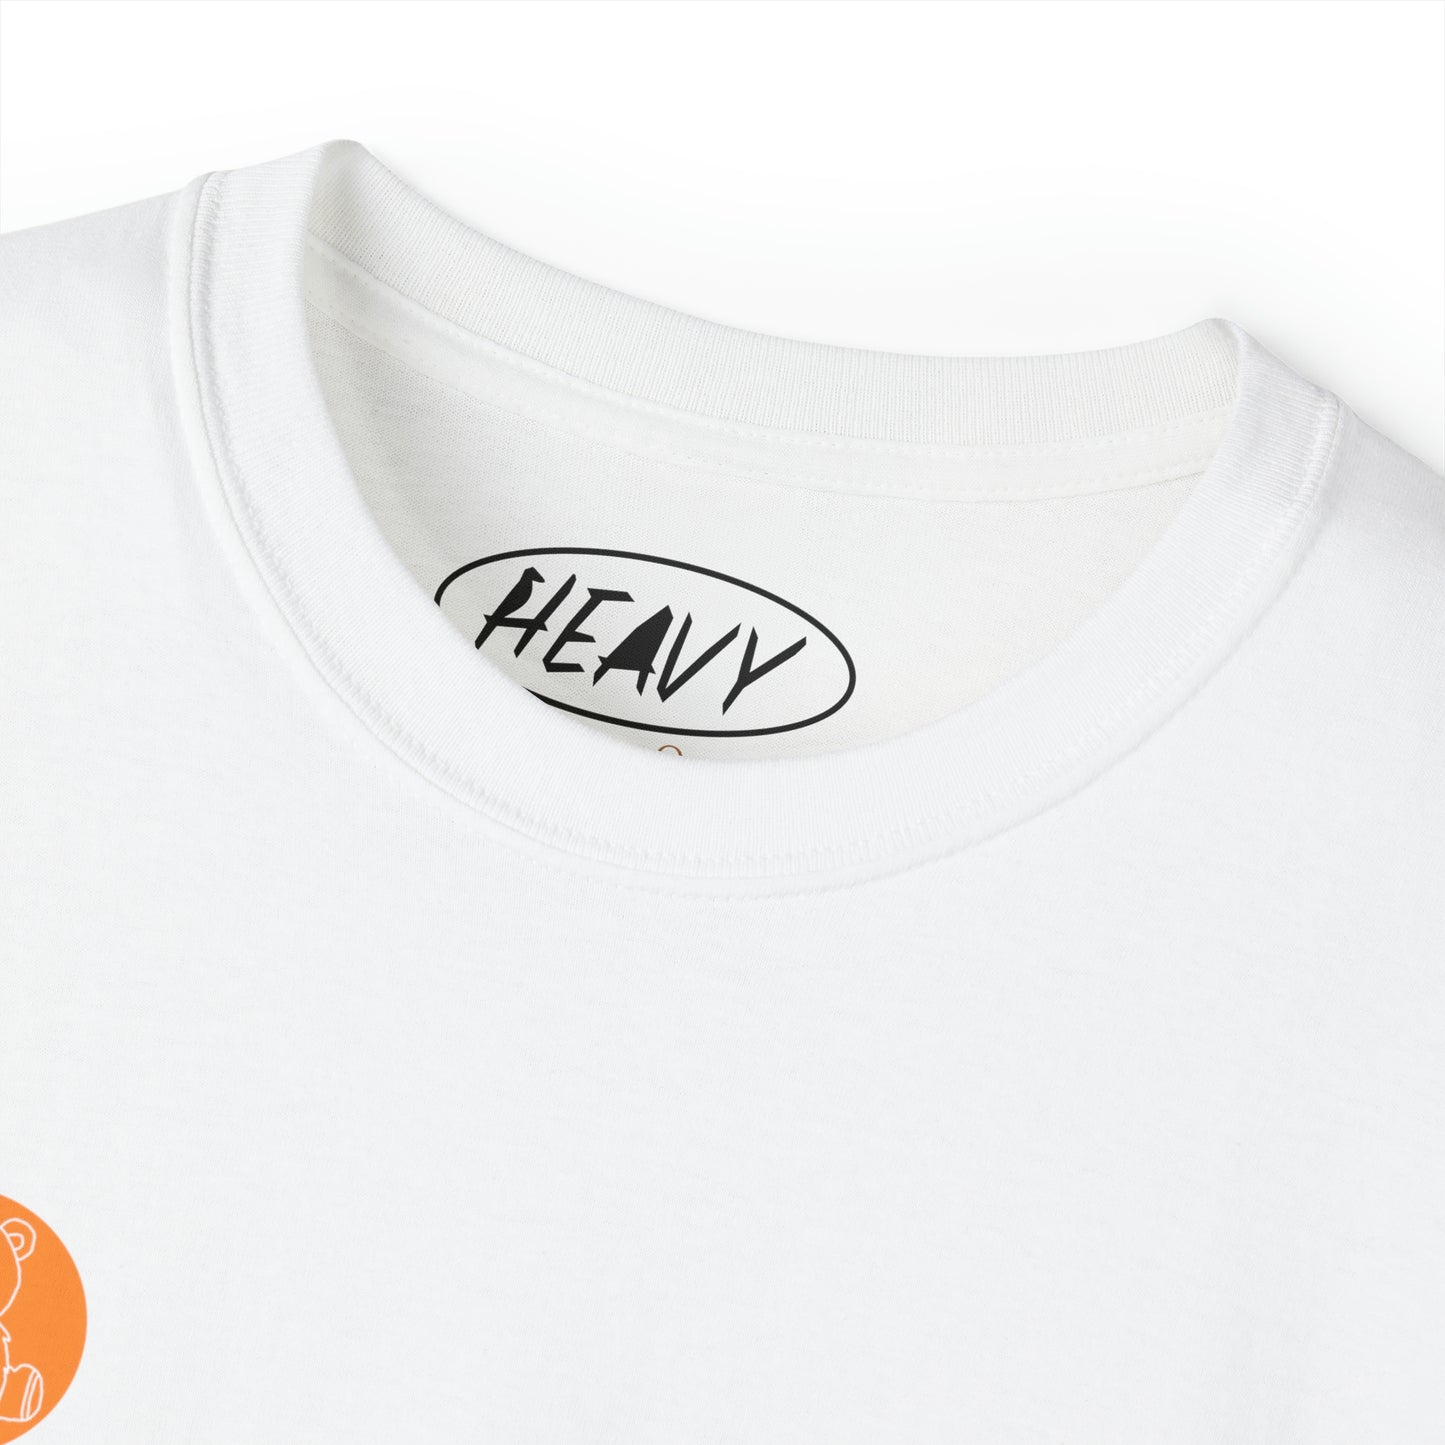 Heavy Limited Oktober – Weiß